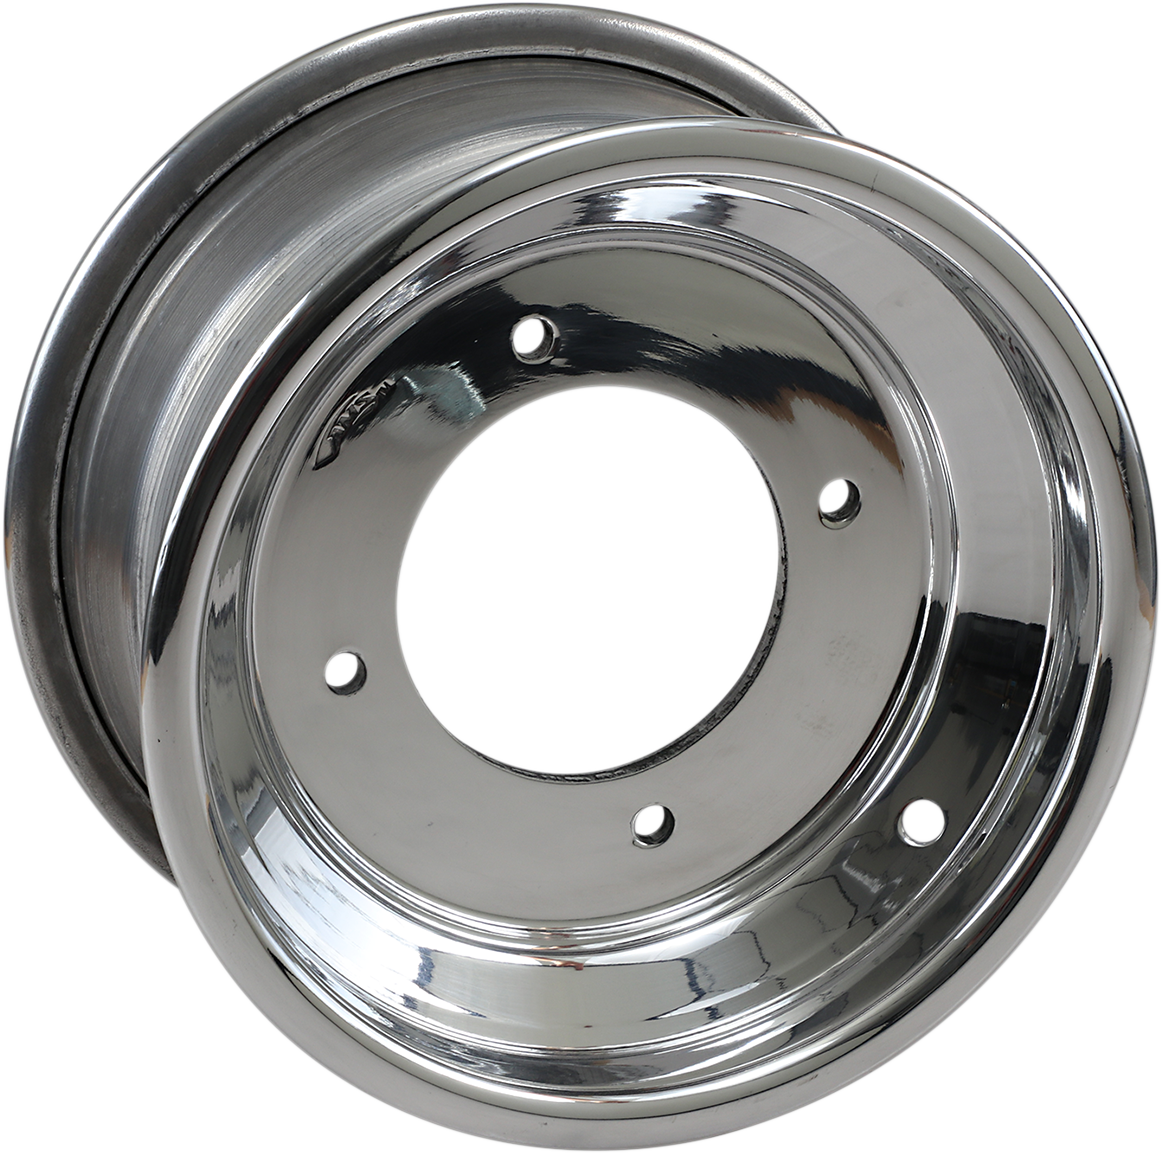 AMS [0232-0115] Rolled-Lip Spun Aluminum Wheel 9x8 - 3+5 Offset - 4/110 - Polish...cont'd | Wheel S/R 9X8 4/110 3+5